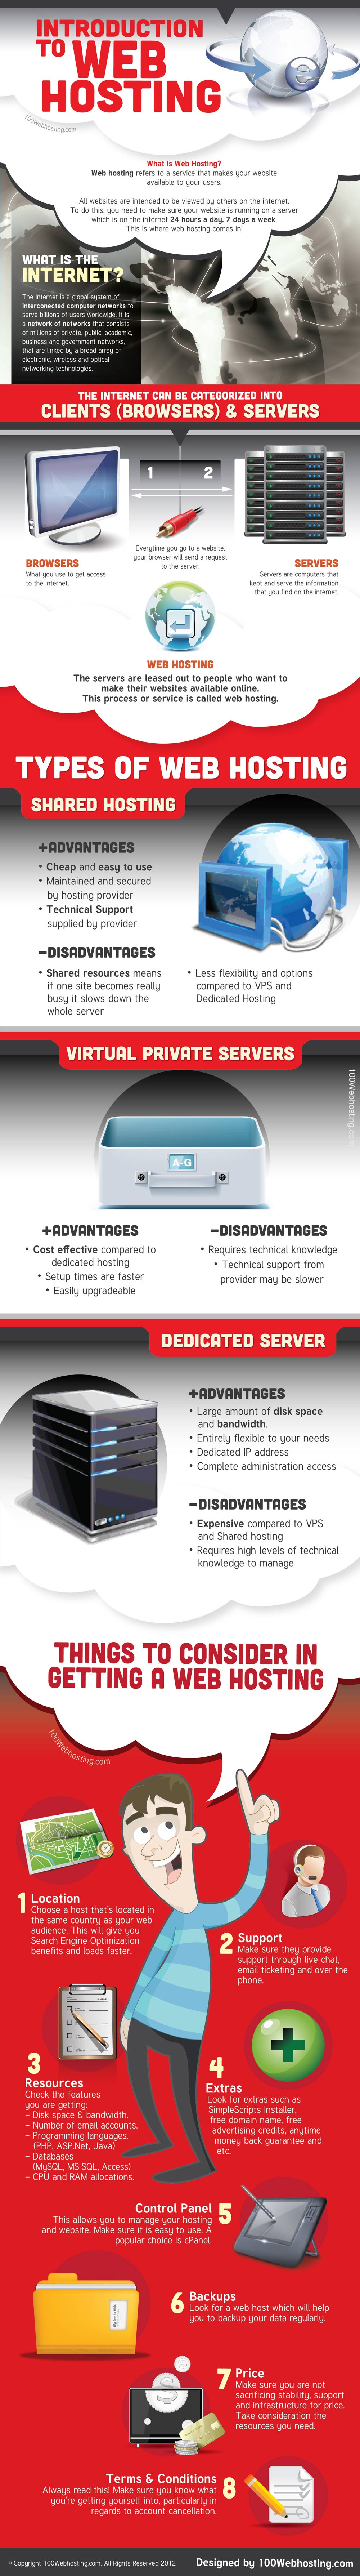 web hosting infographic